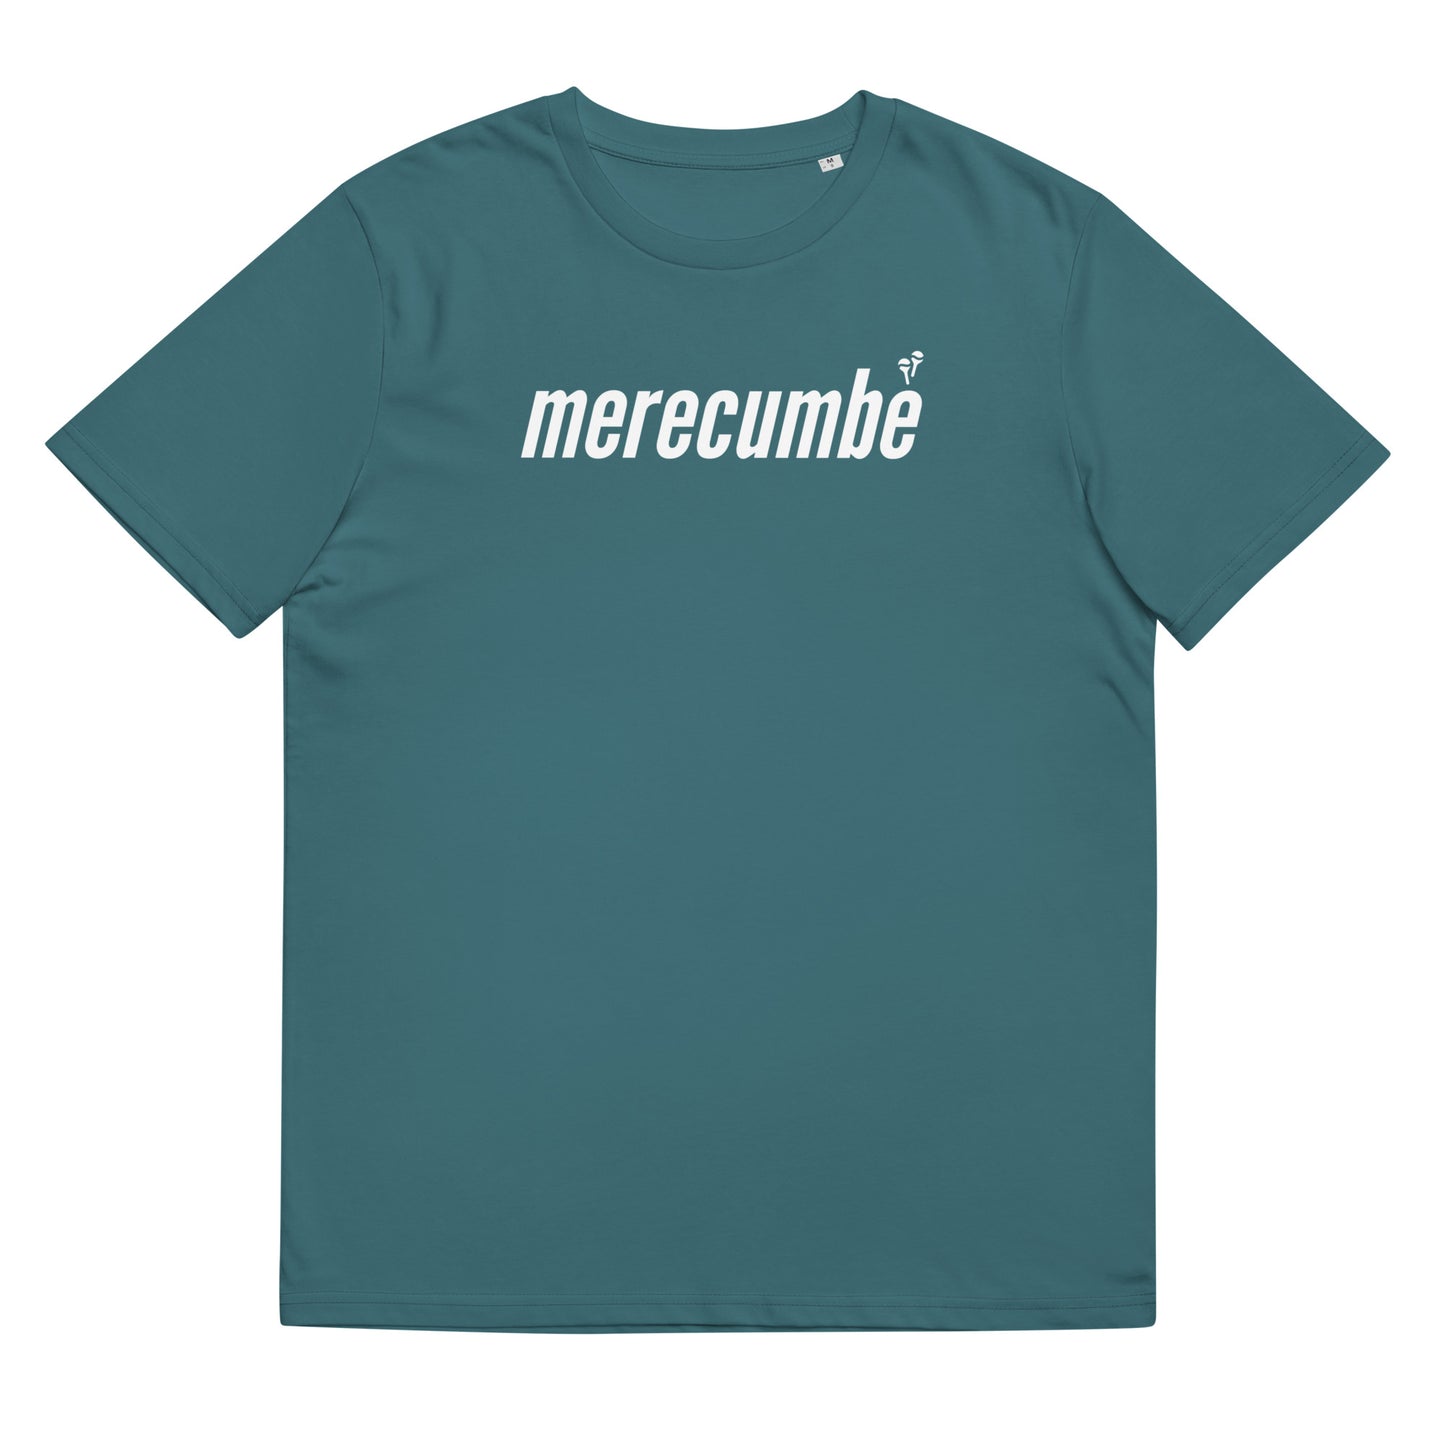 Merecumbé - Unisex organic cotton t-shirt